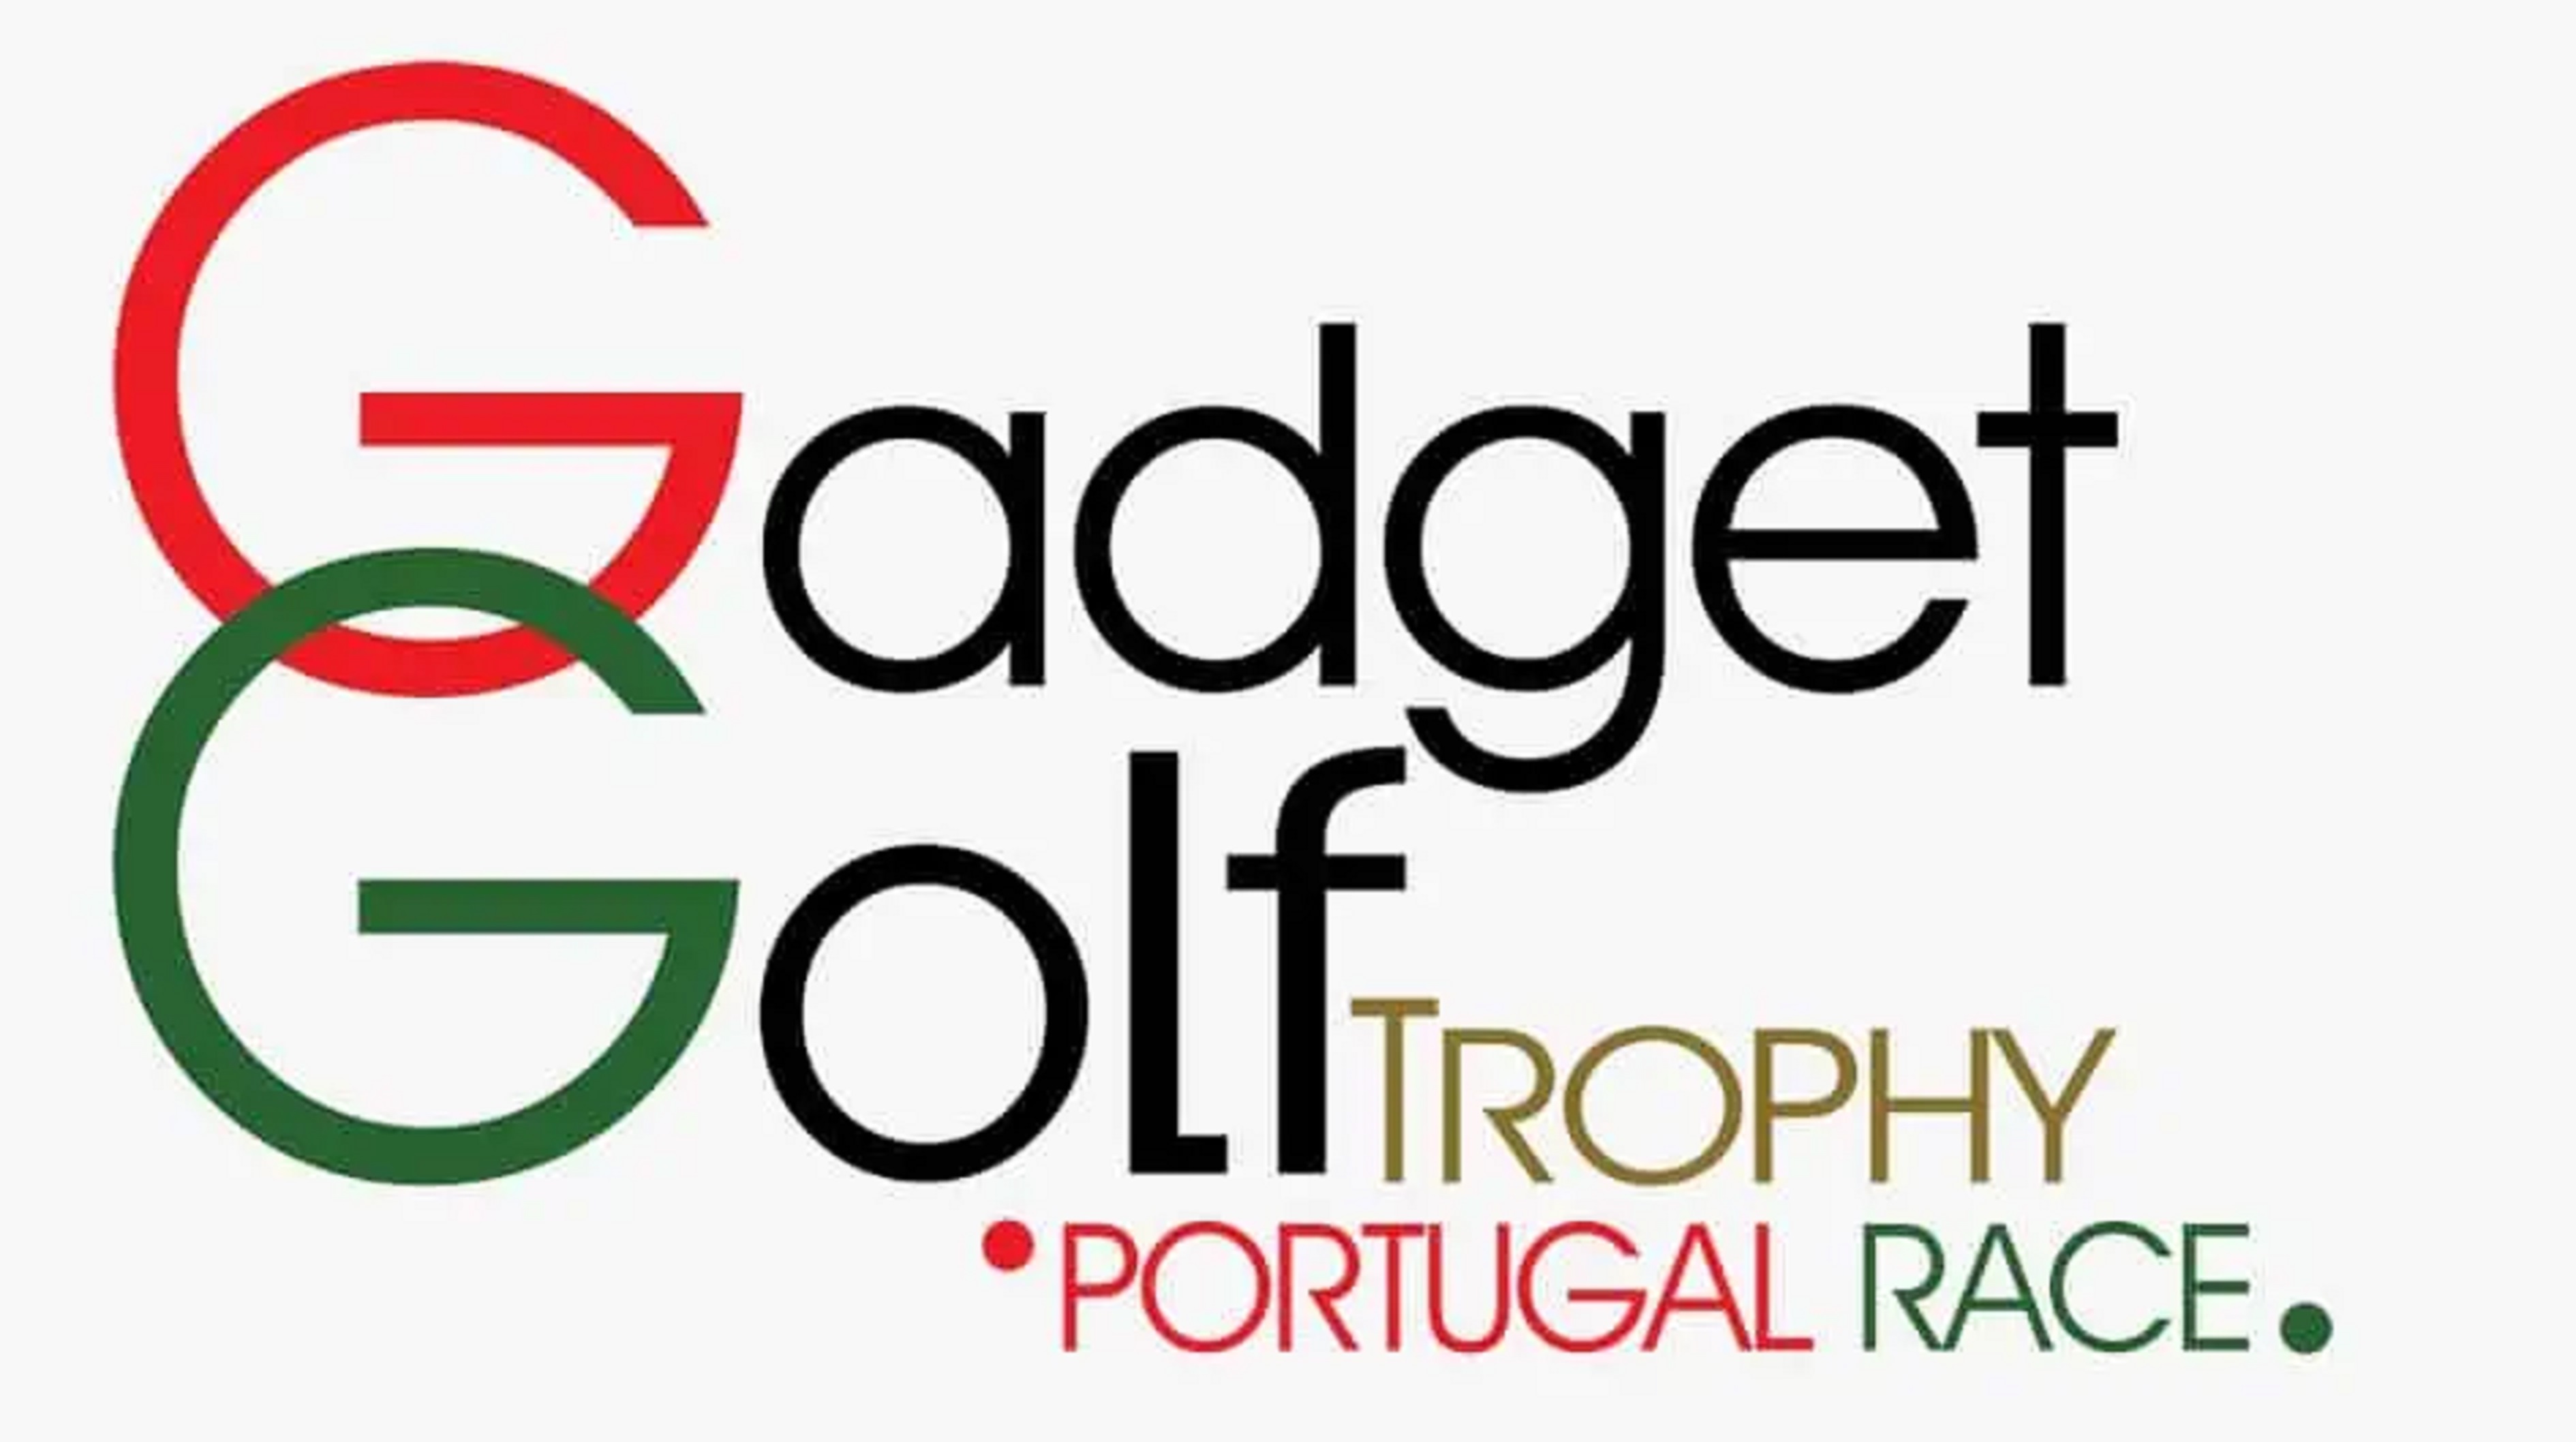 Sabato, 7 ottobre 2023: GADGET GOLF TROPHY PORTUGAL RACE